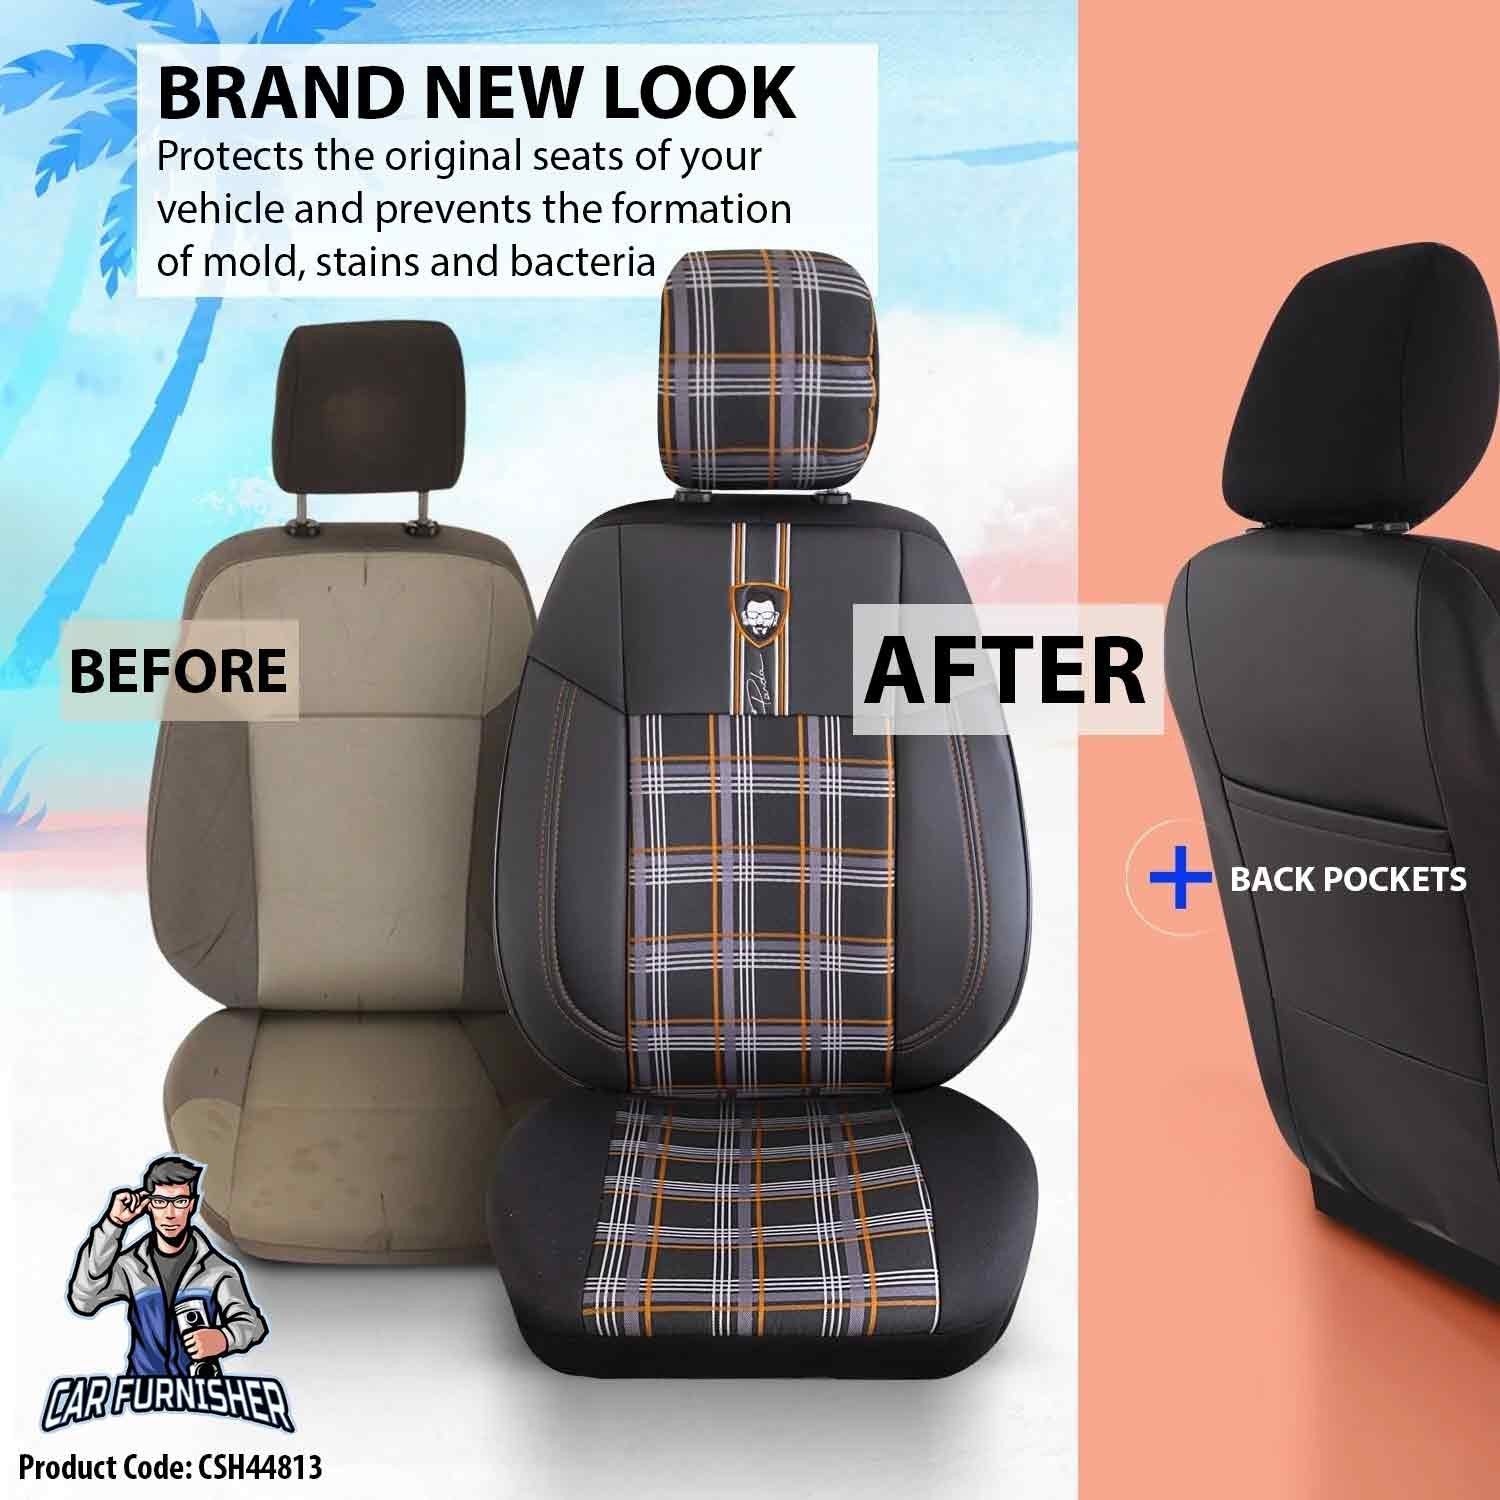 Luxury Car Seat Cover Set (4 Colors) | Cesme Series Orange Leather & Fabric